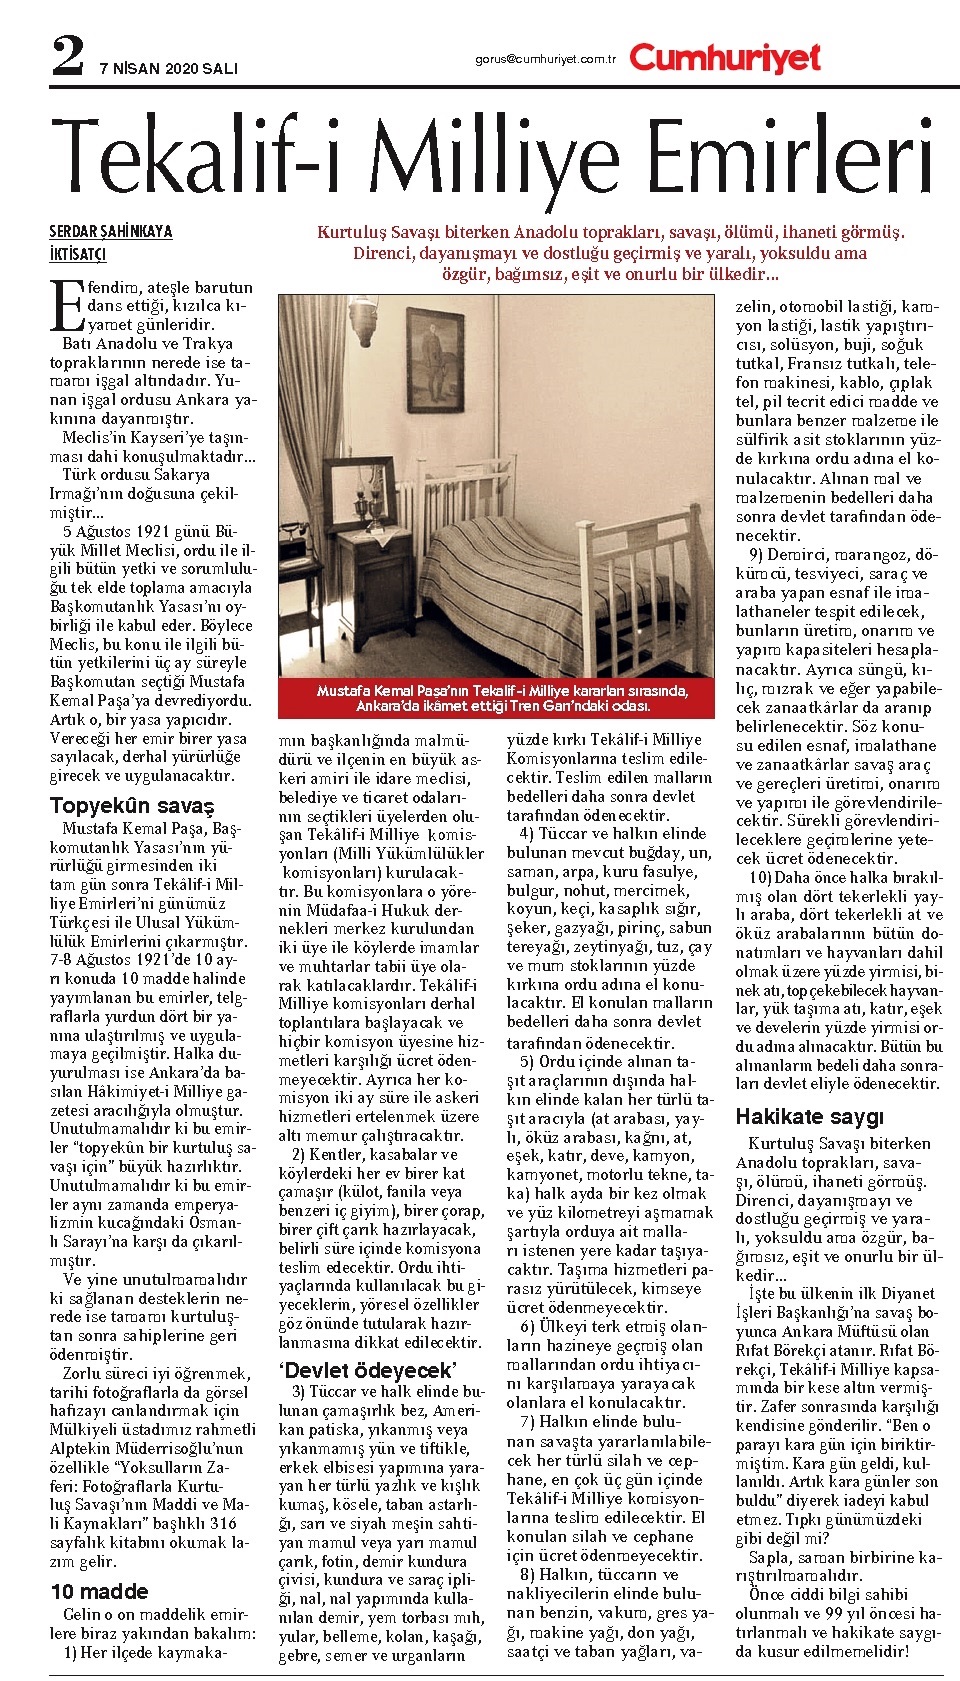 Serdar Şahinkaya-TEKALİF-İ MİLLİYE EMİRLERİ-Cumhuriyet Gazete-7 Nisan 2020